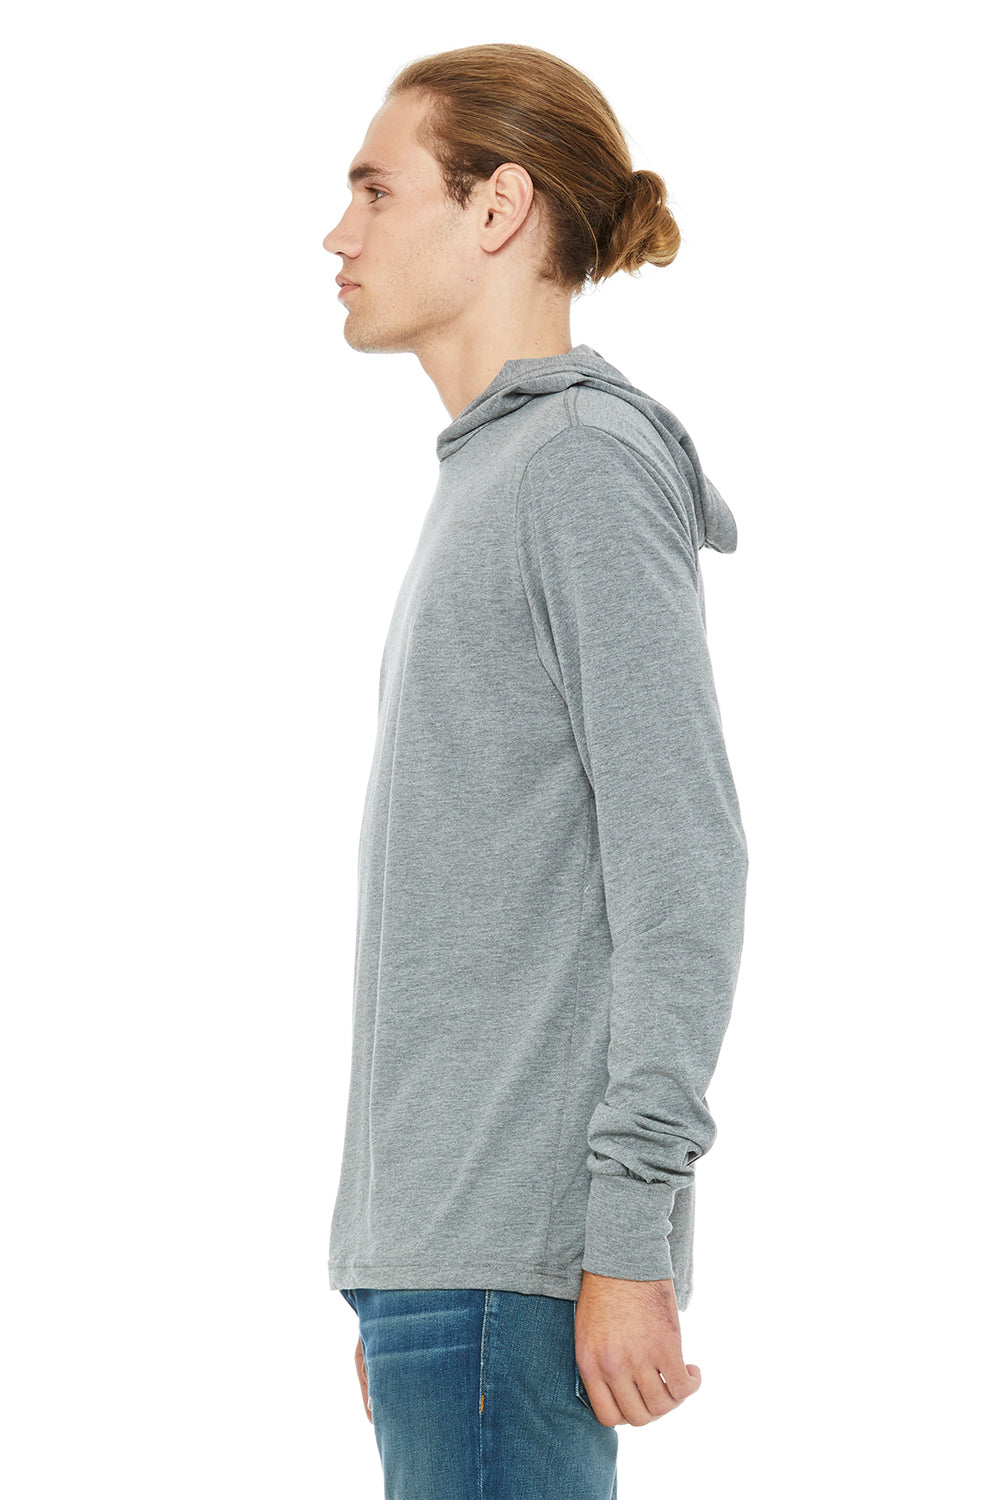 Bella + Canvas BC3512/3512 Mens Jersey Long Sleeve Hooded T-Shirt Hoodie Grey Model Side